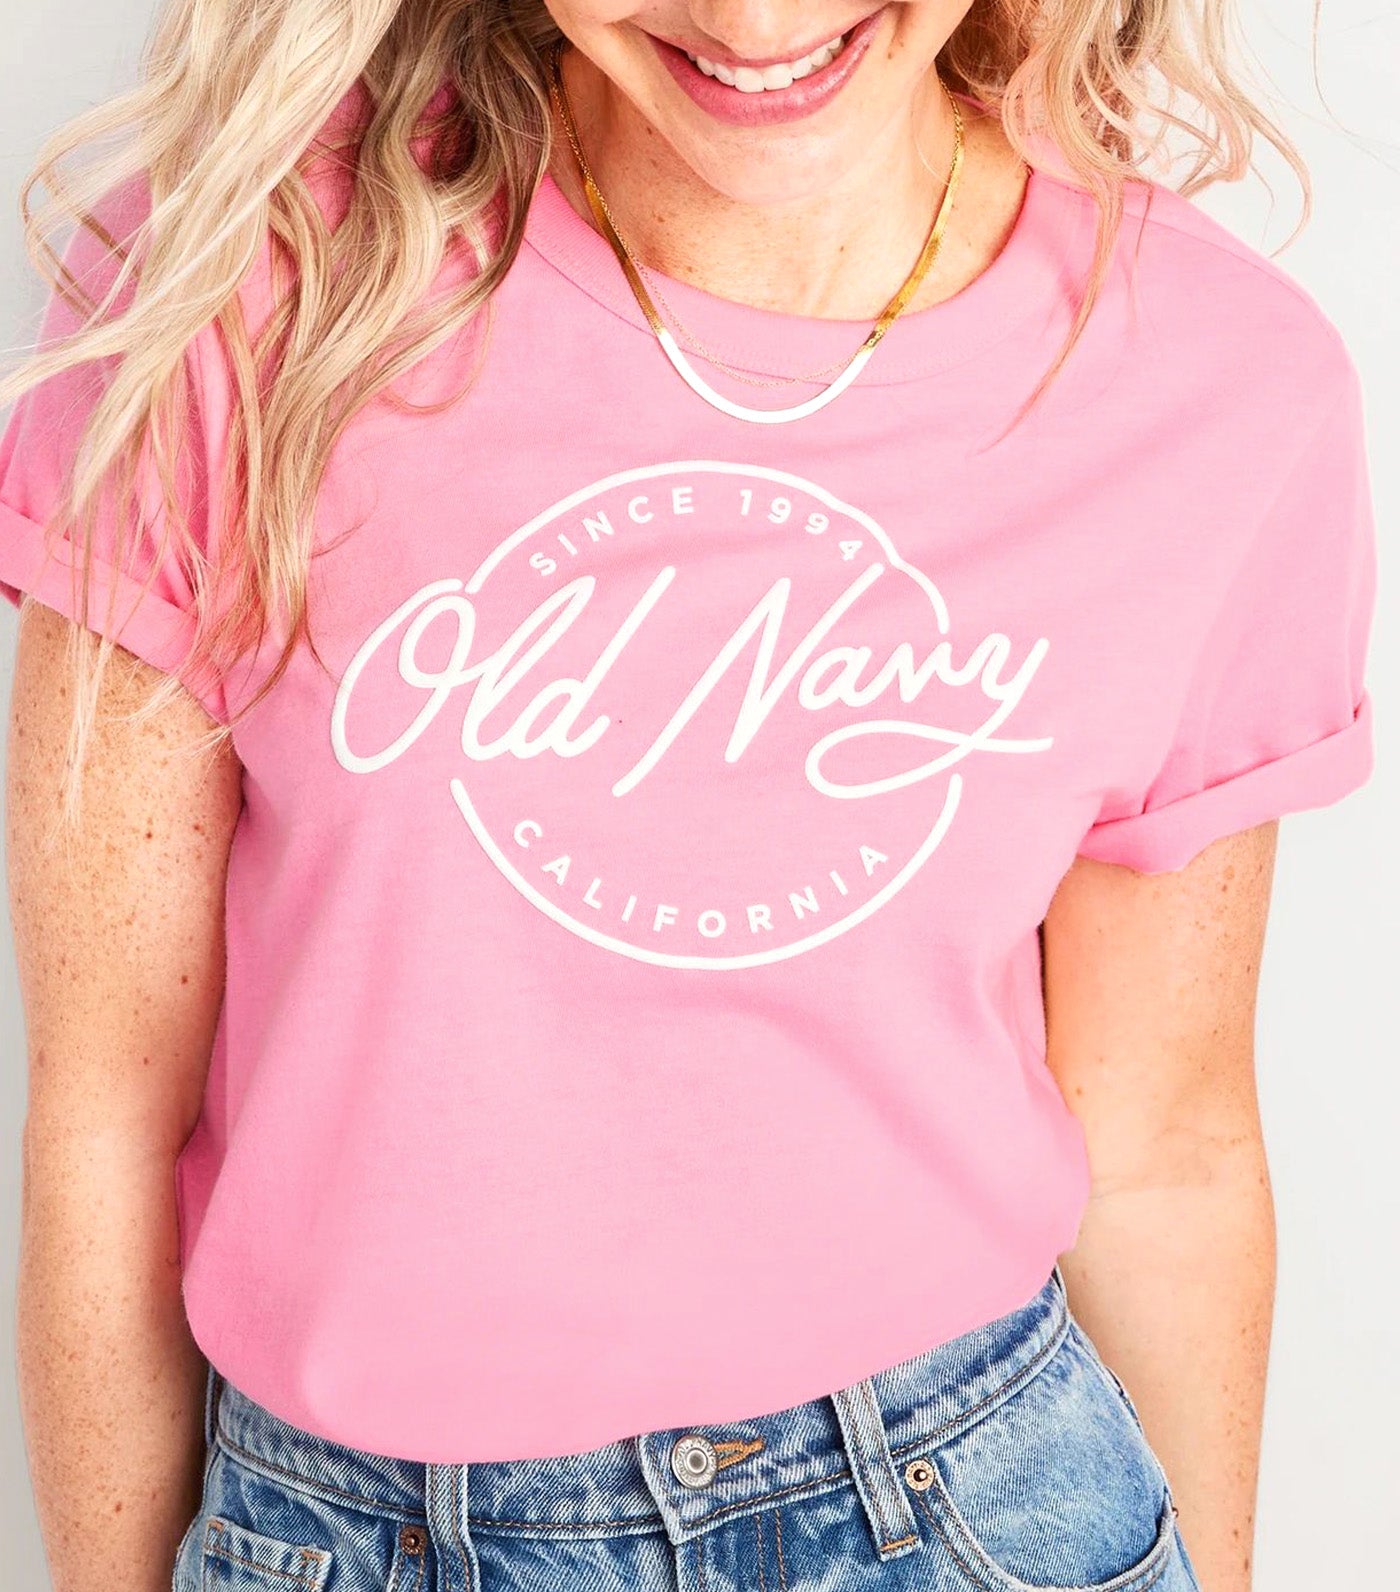 EveryWear Logo Graphic T-Shirt for Women Pink Edge Neon Poly